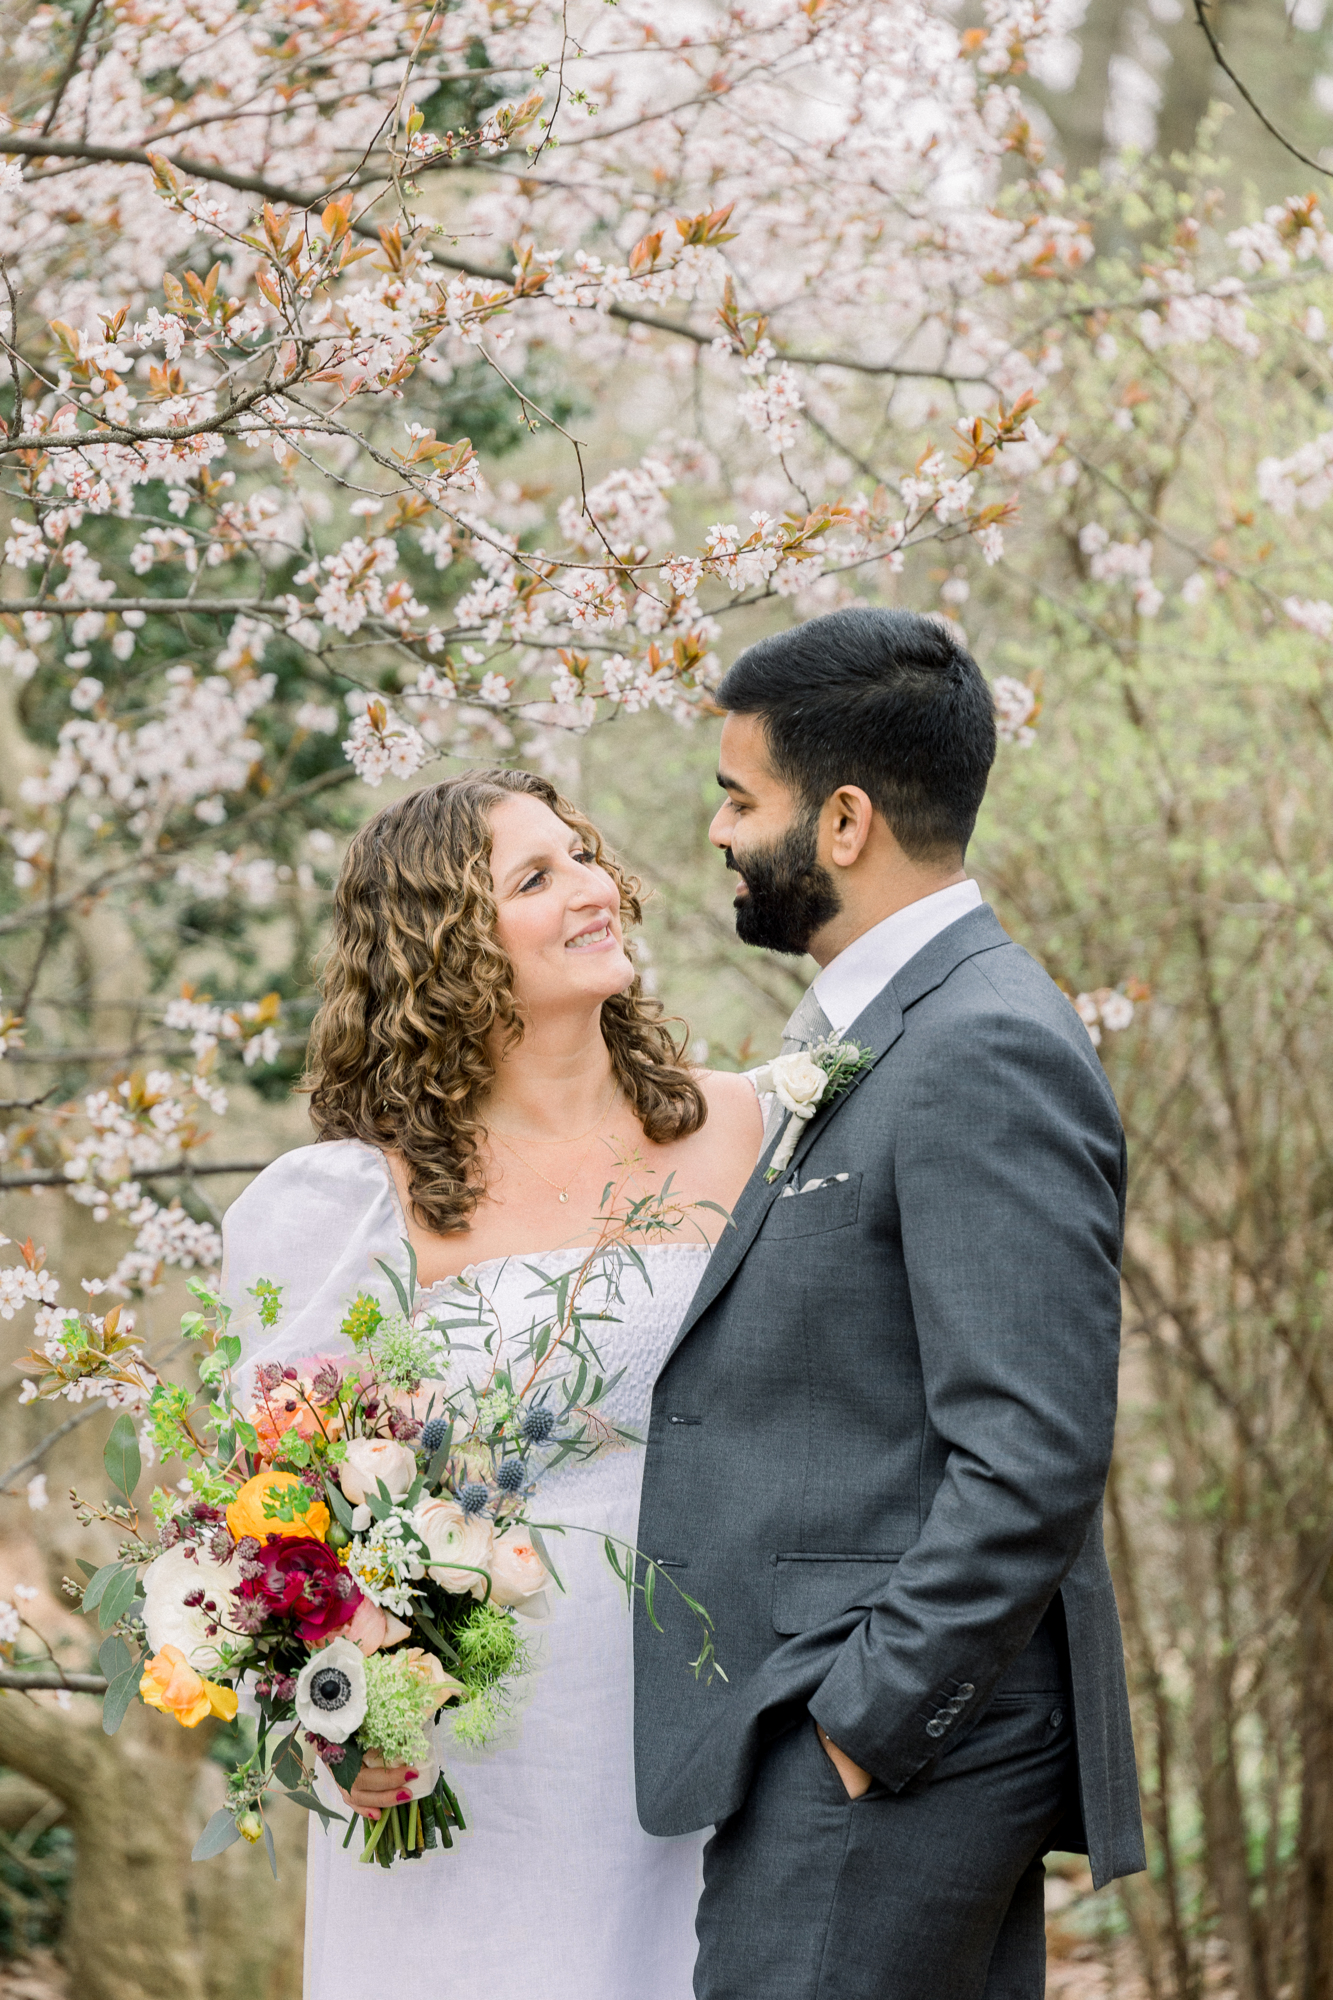 Beautiful Prospect Park Wedding Photos with Springtime Cherry Blossoms